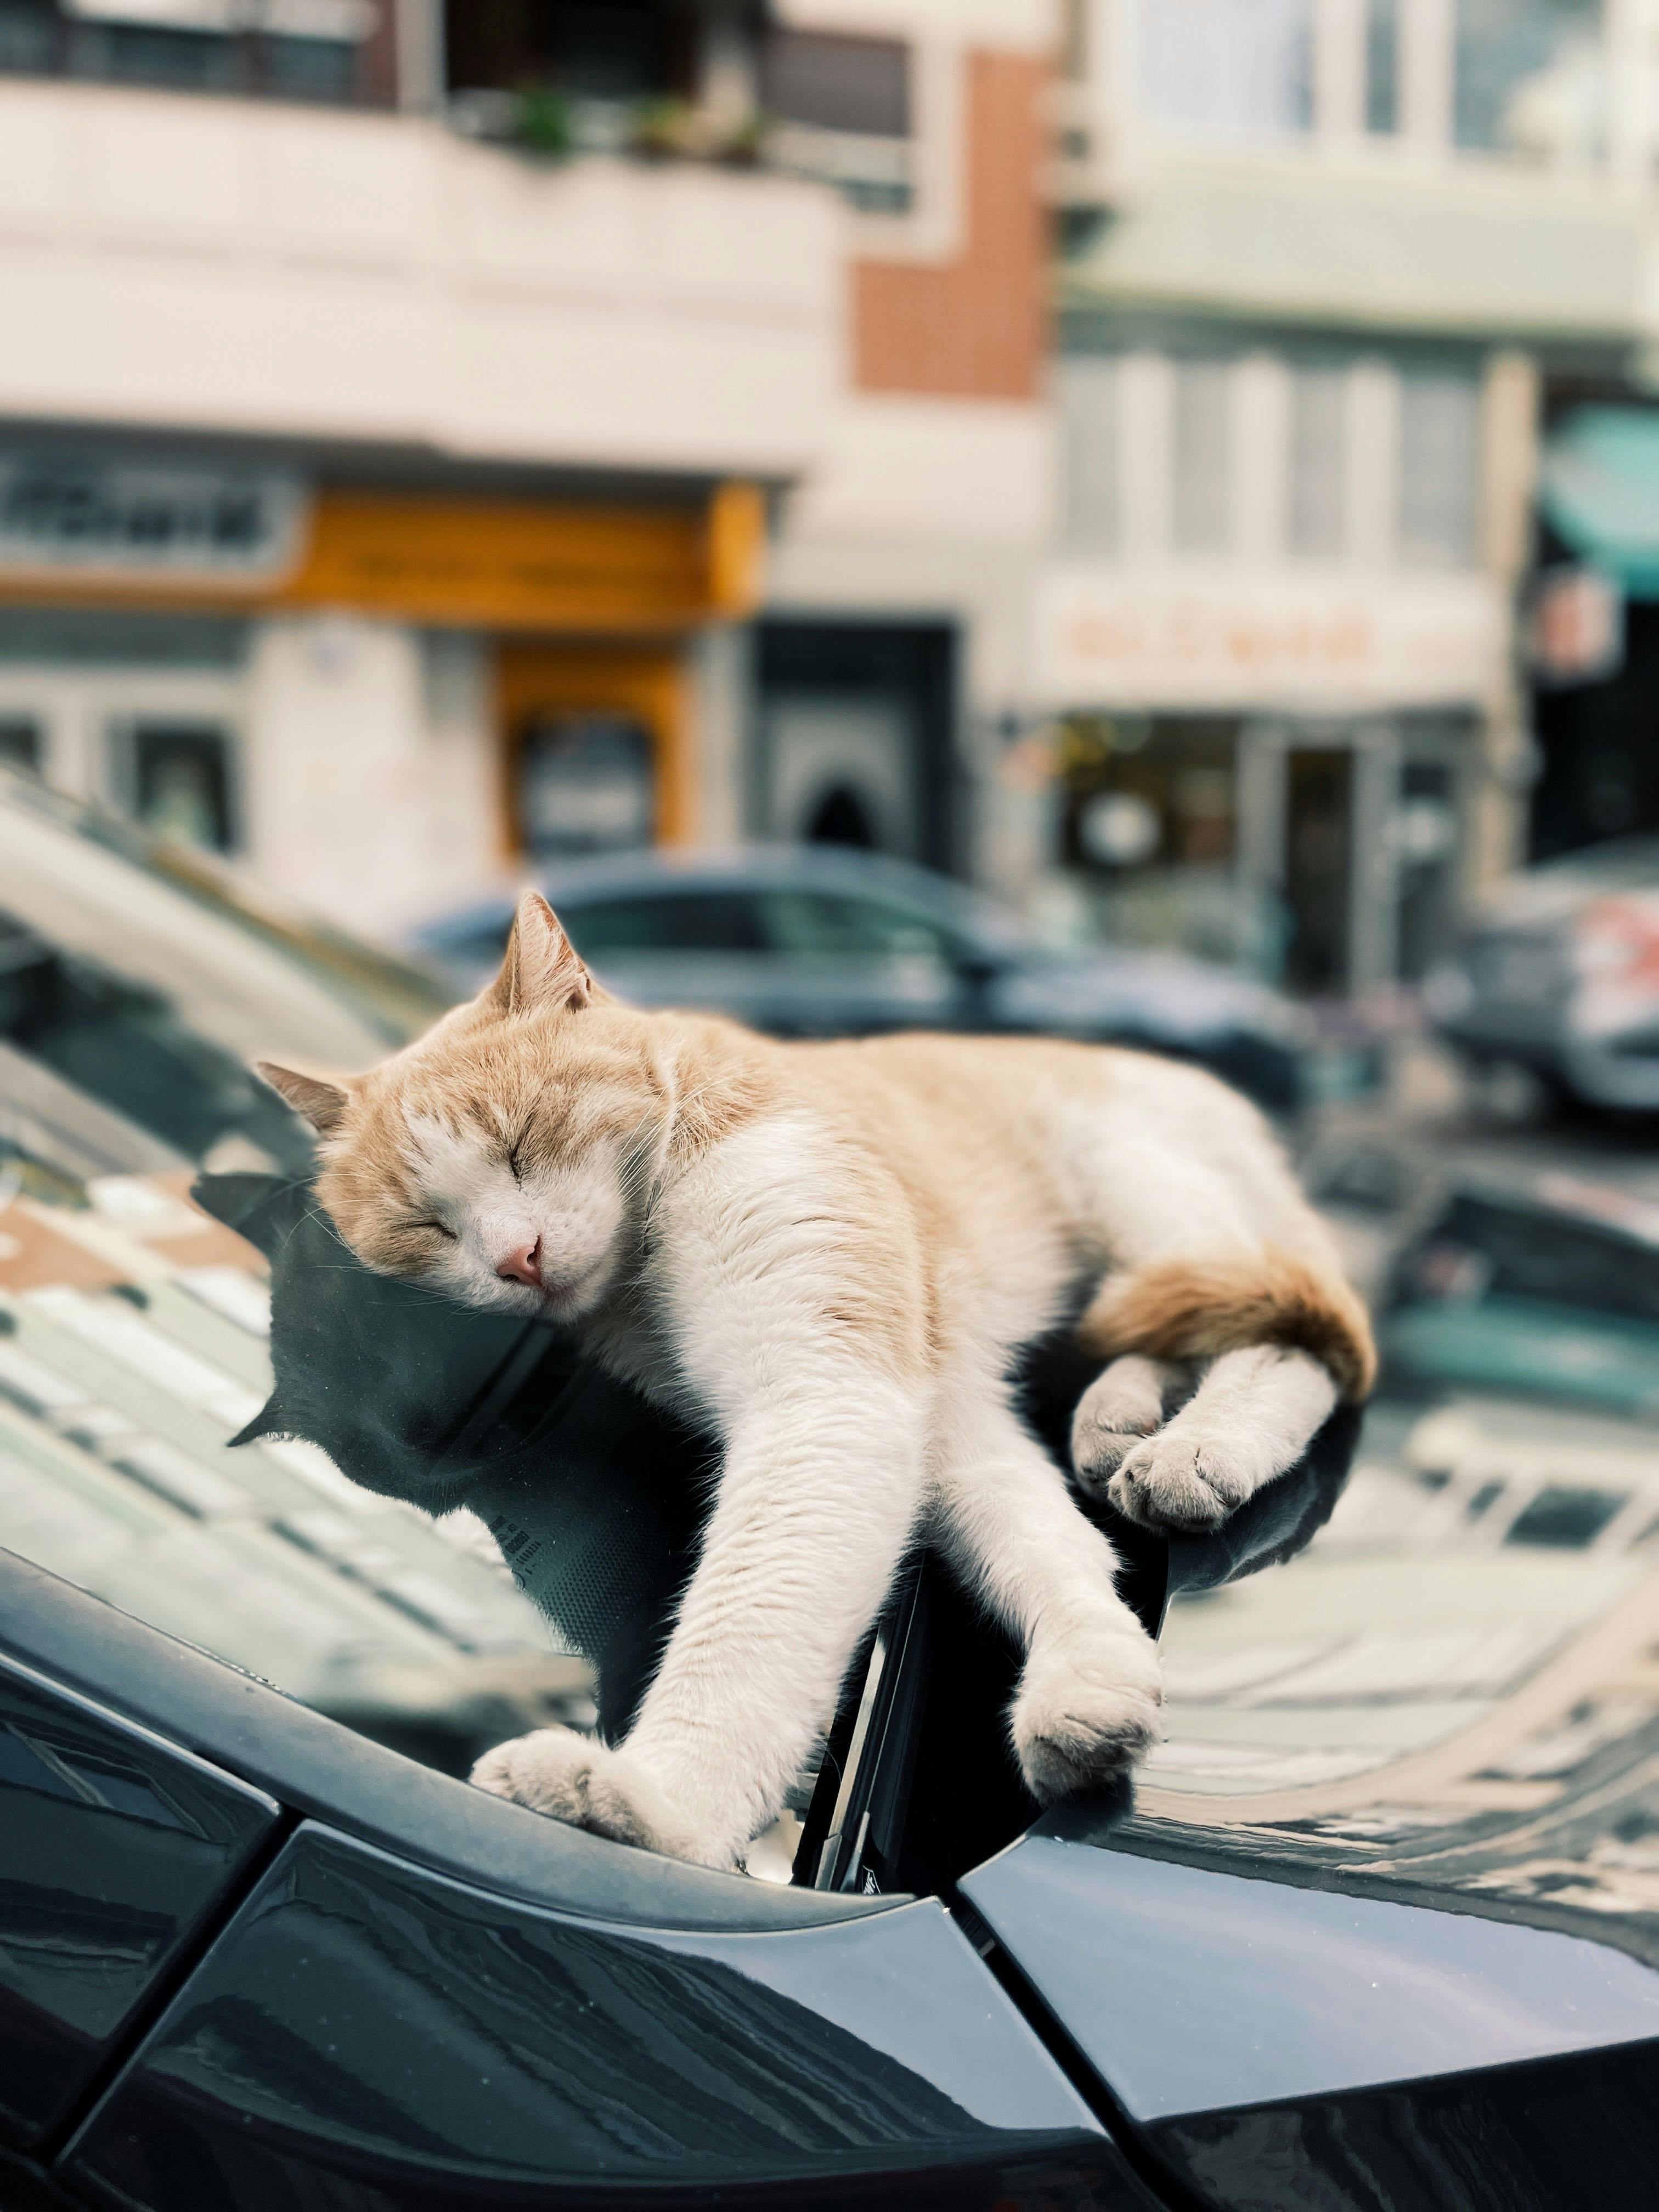 Cat on car 